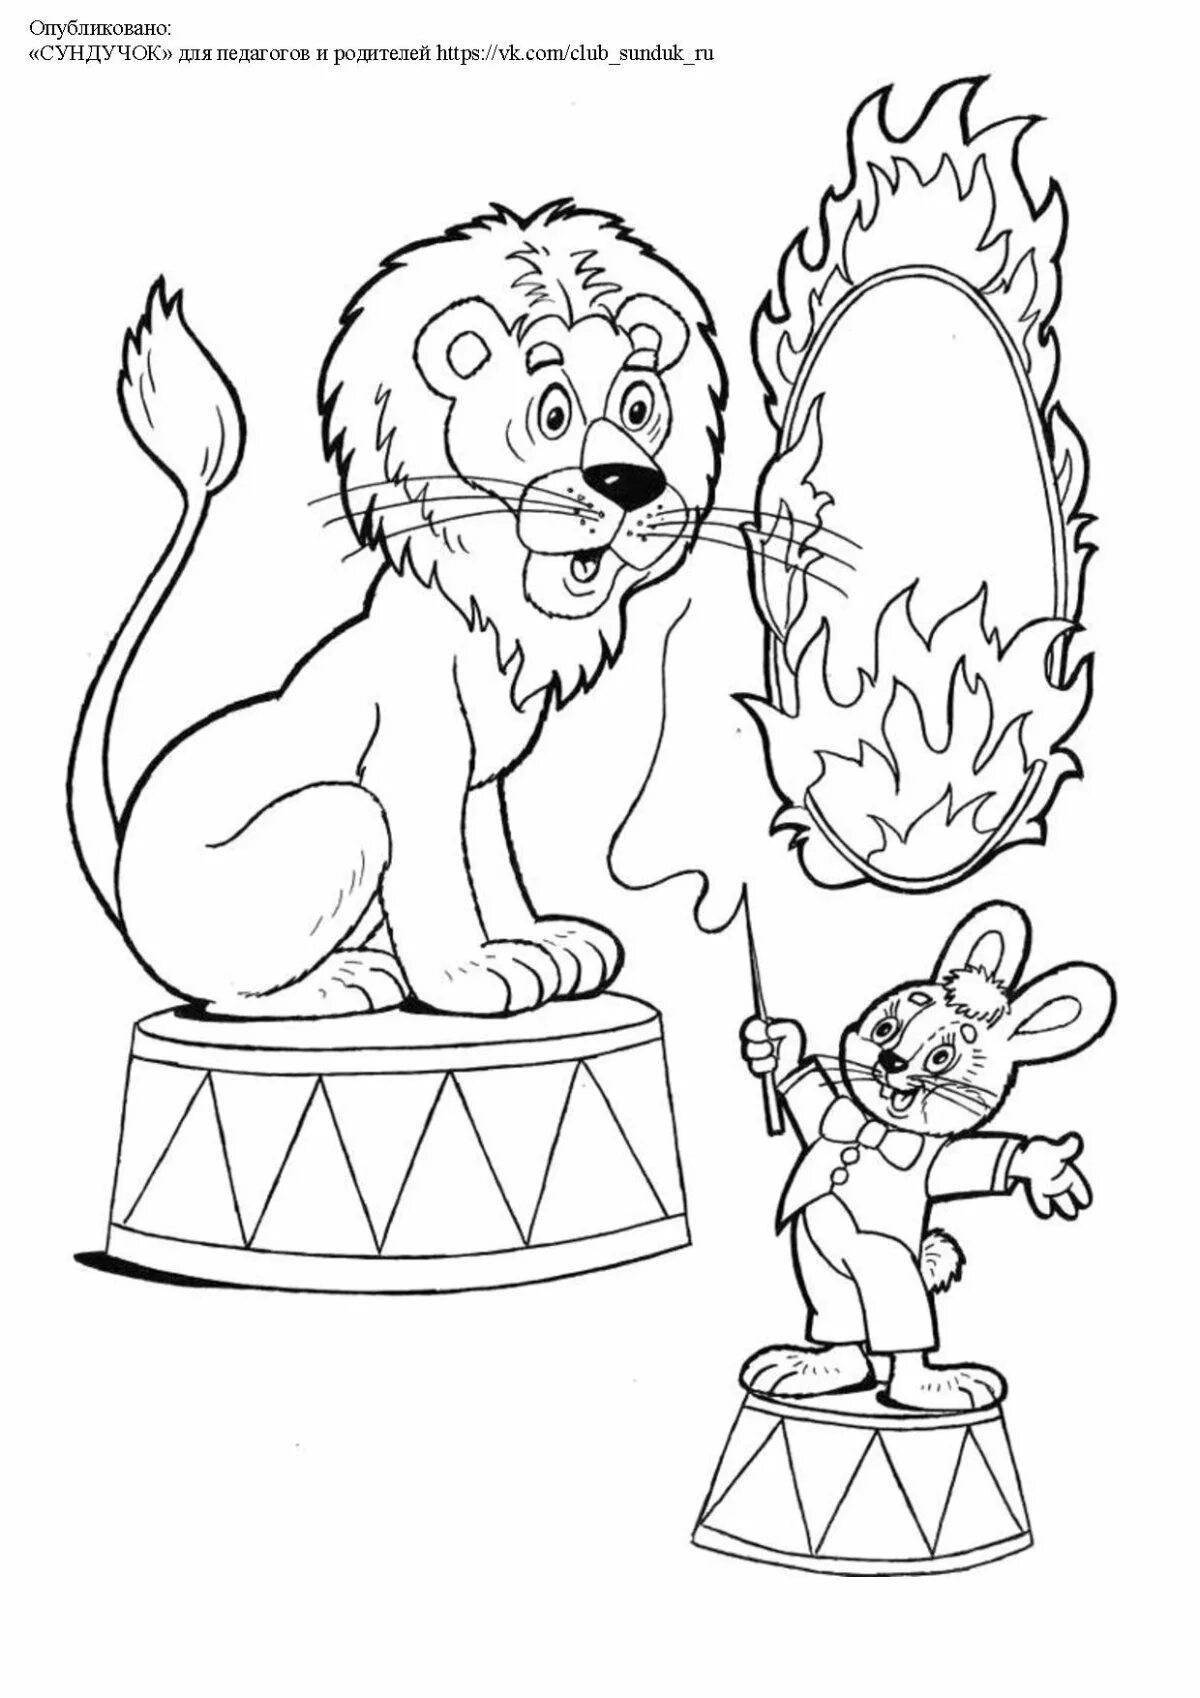 A fun circus coloring book for kids